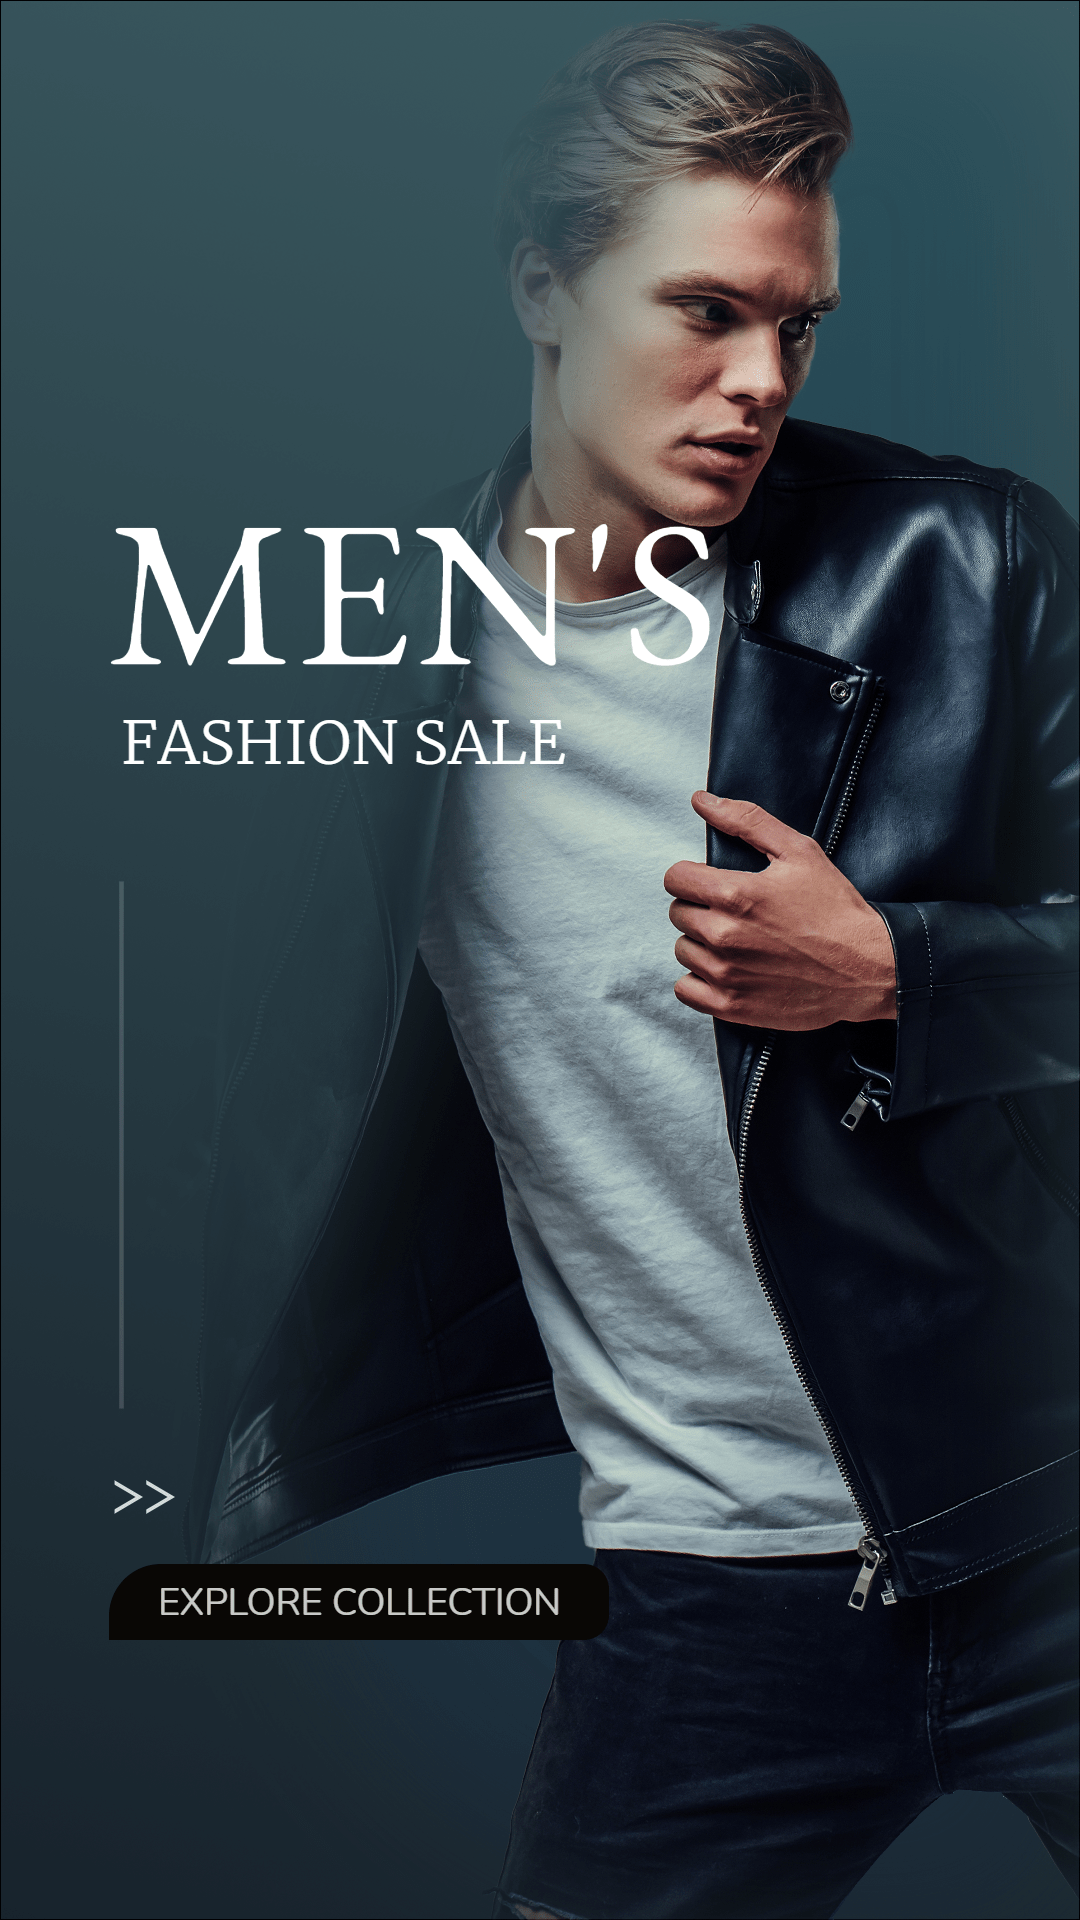 Jacket Coat Men's Fashion Sale Promotion Ecommerce Story预览效果